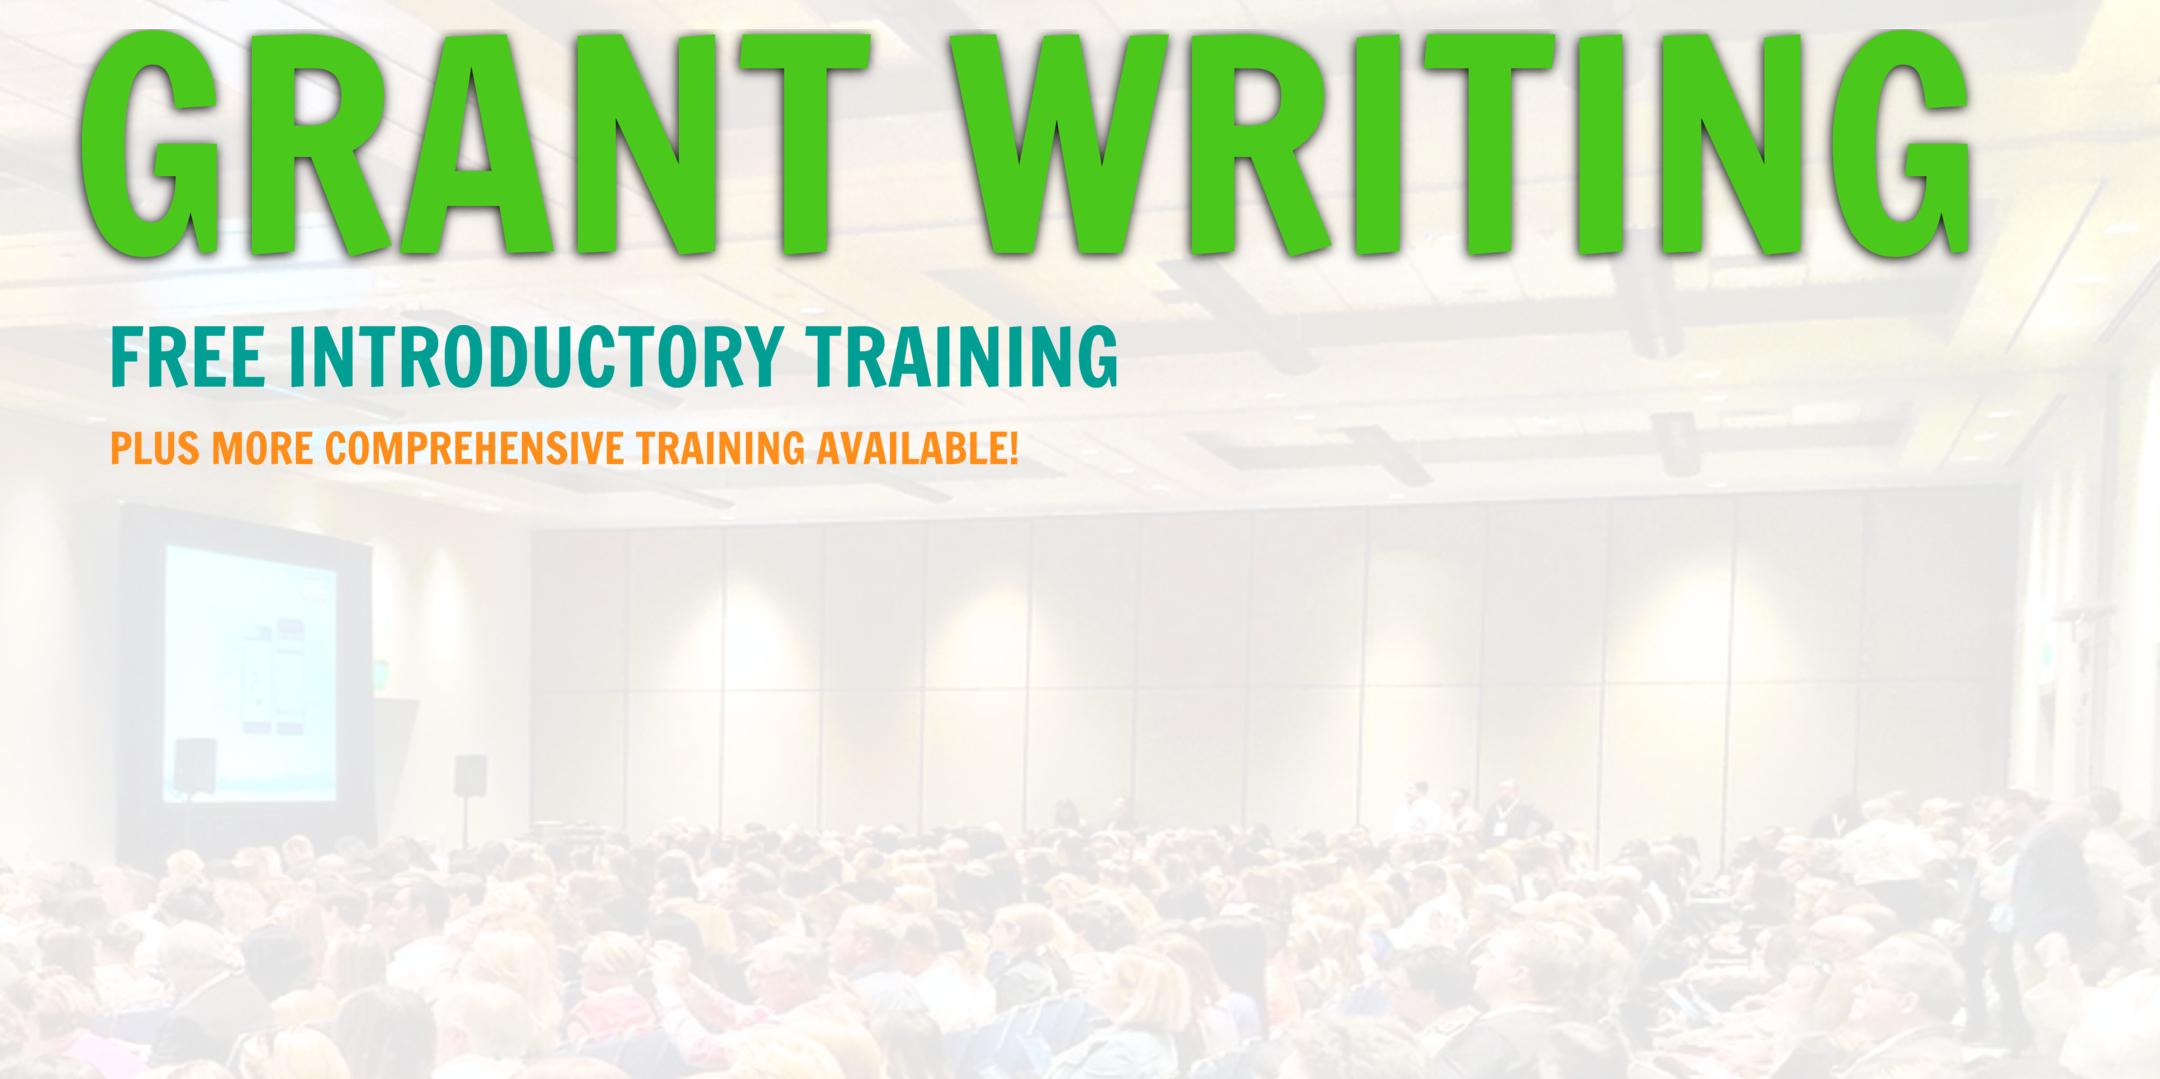  Grant Writing Introductory Training... Birmingham, Alabama